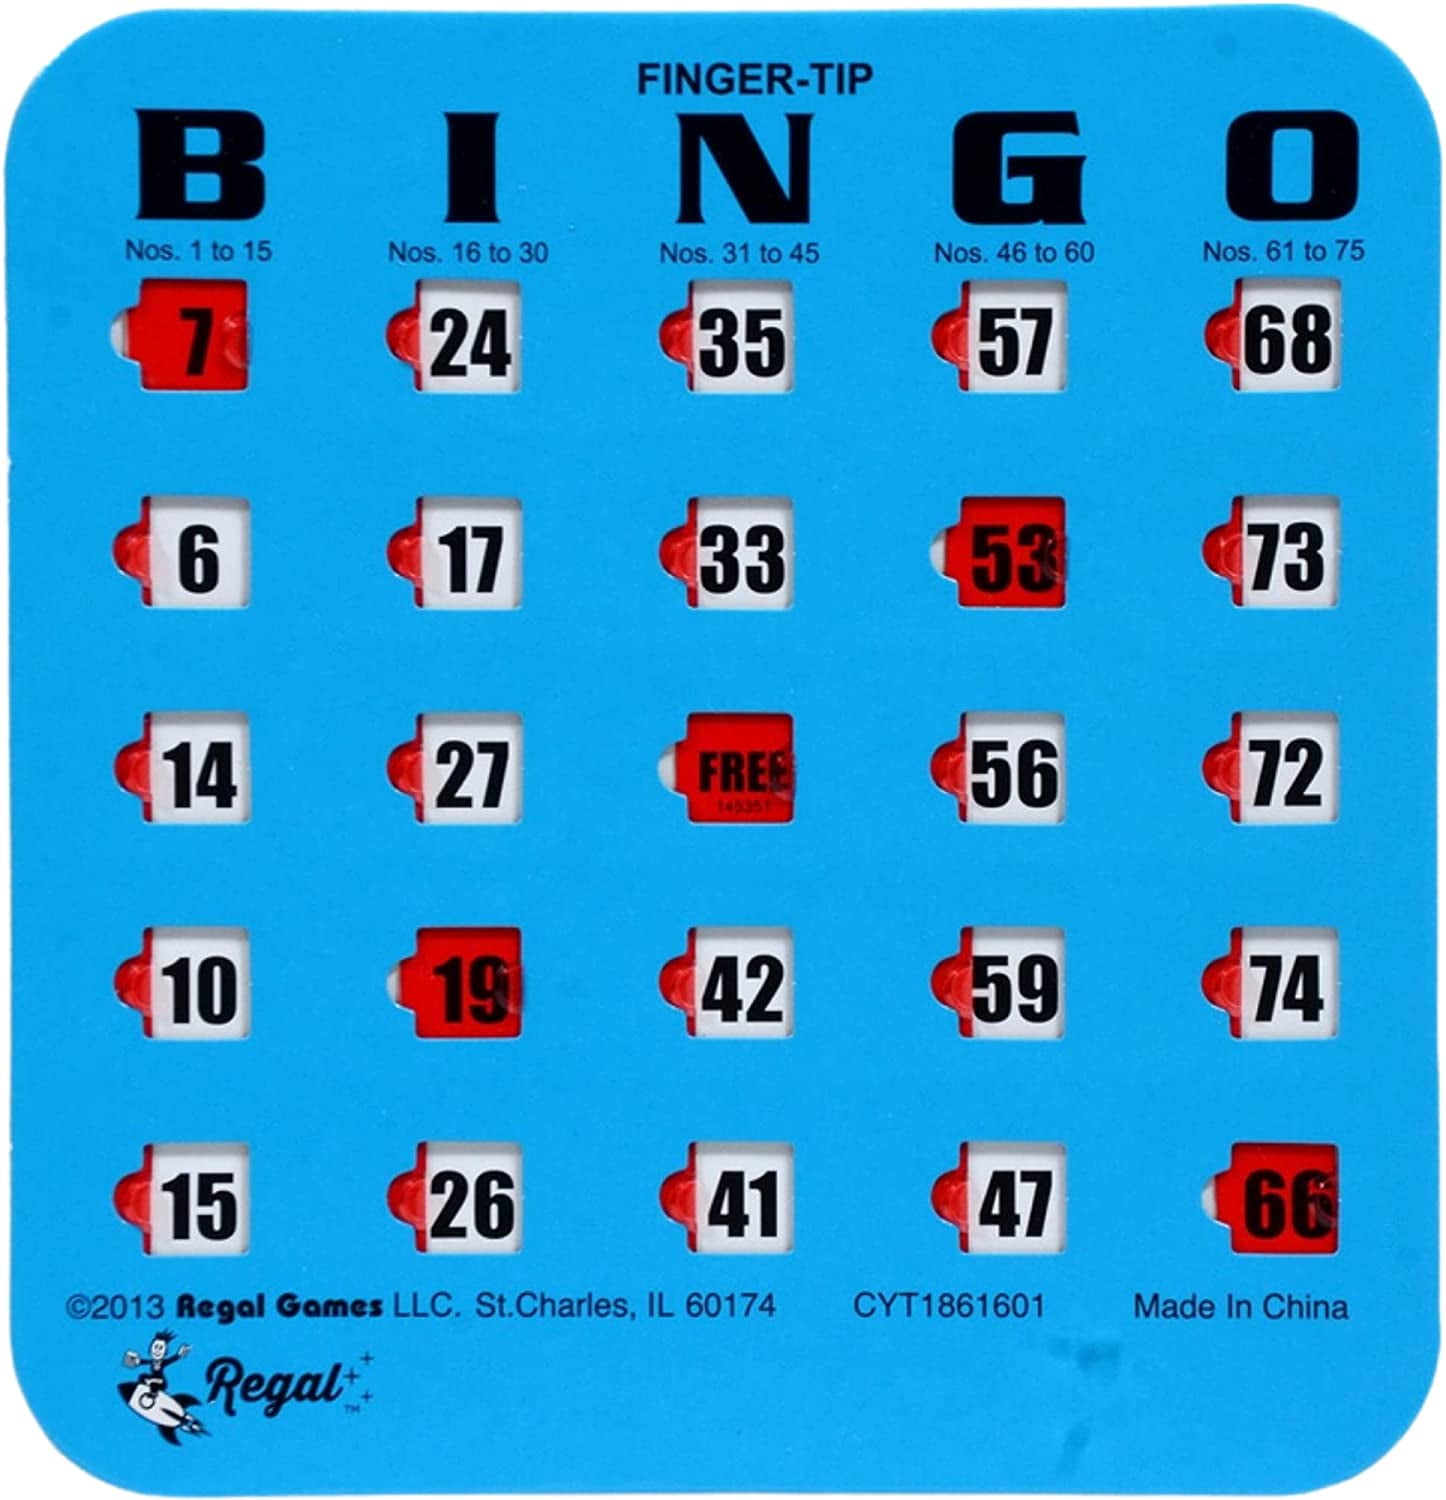 25 COUNT JUMBO NUMBER FINGER-TIP BINGO SHUTTER CARDS